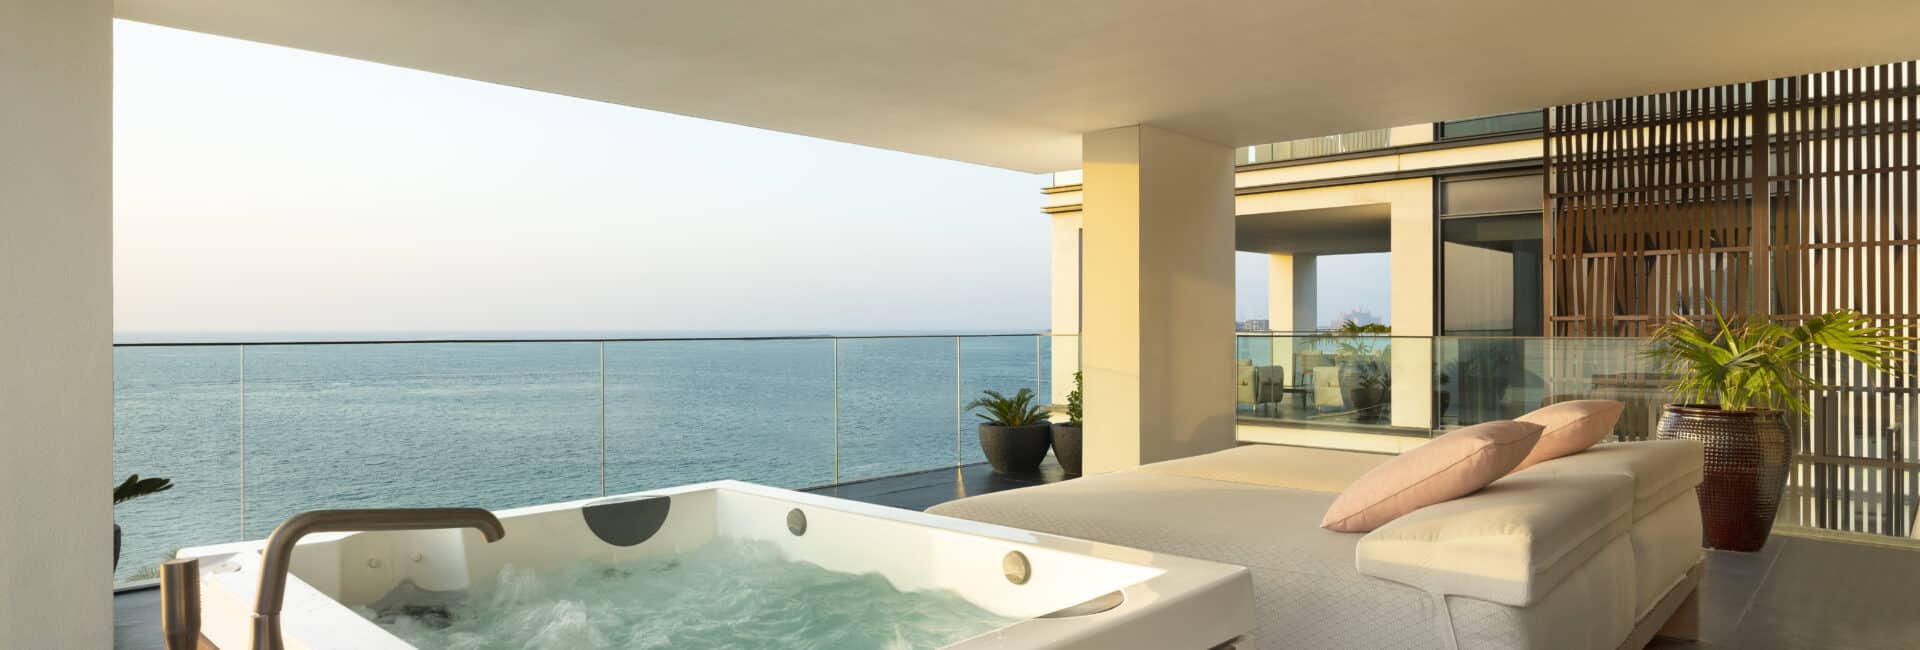 Banyan Tree Dubai - Harmony Bedroom Oceanfront Presidential Suite